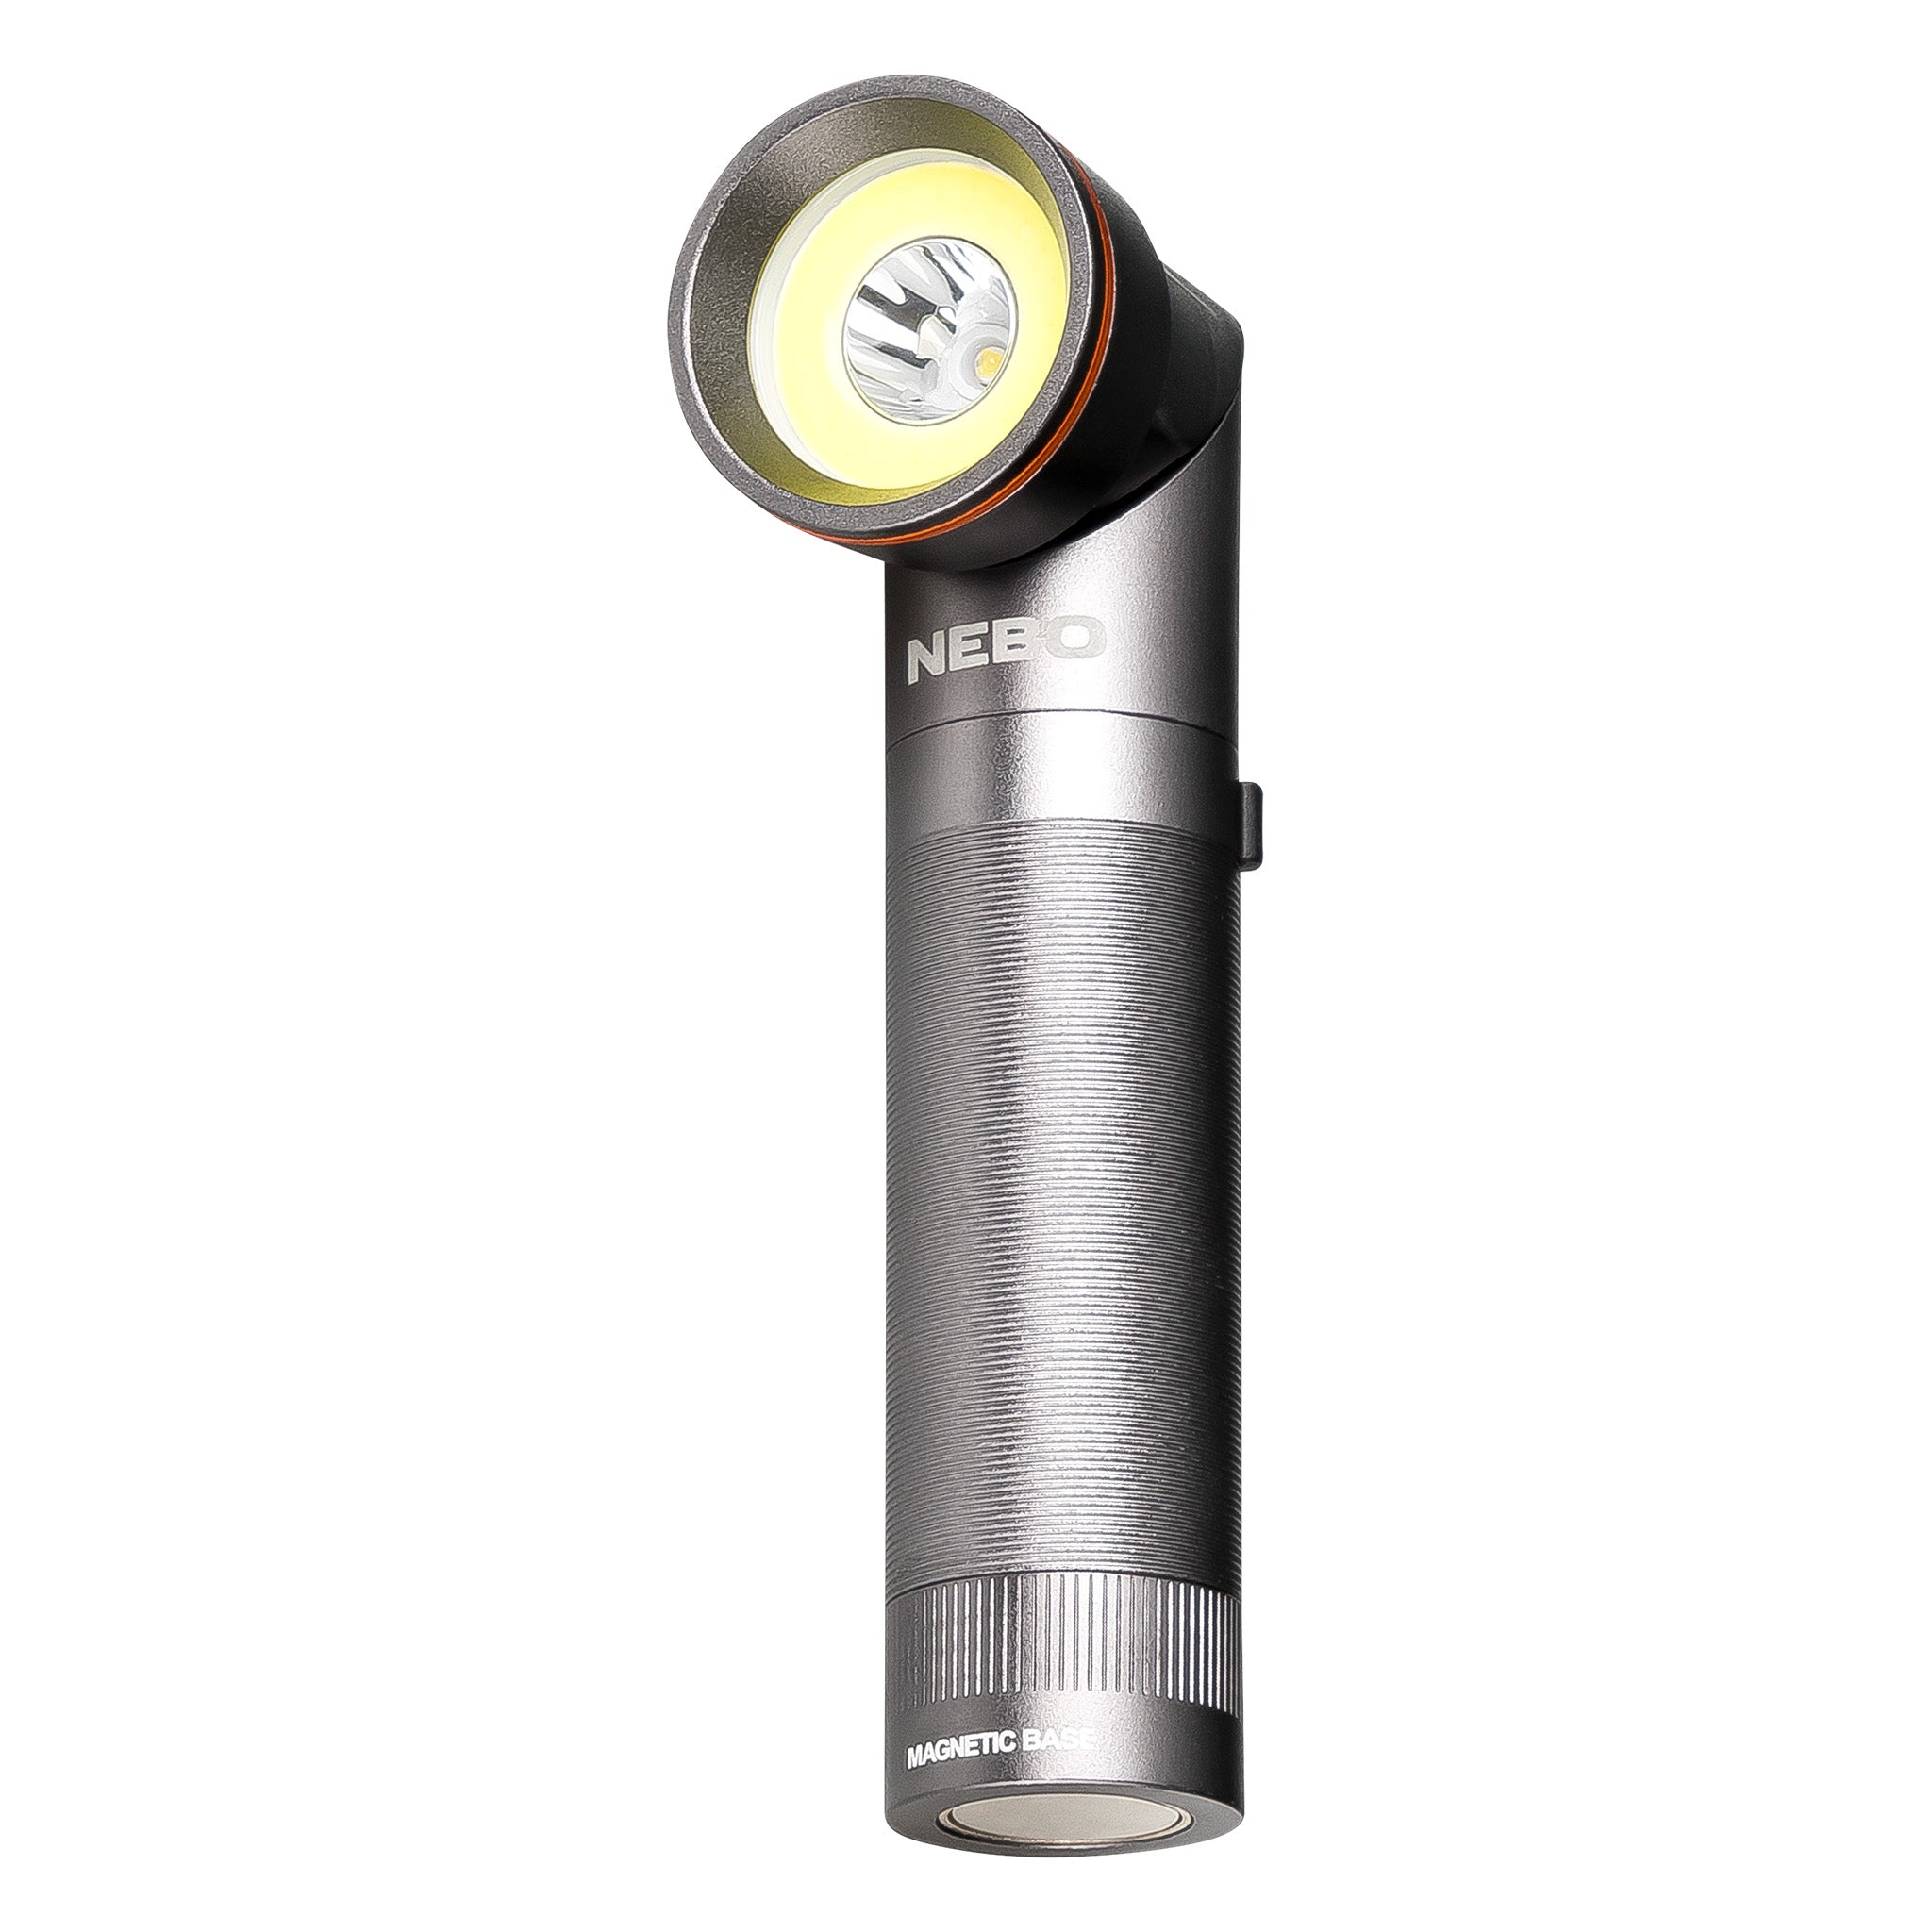 FRANKLIN Pivot 300 Lumen Rechargeable Spotlight / Work light